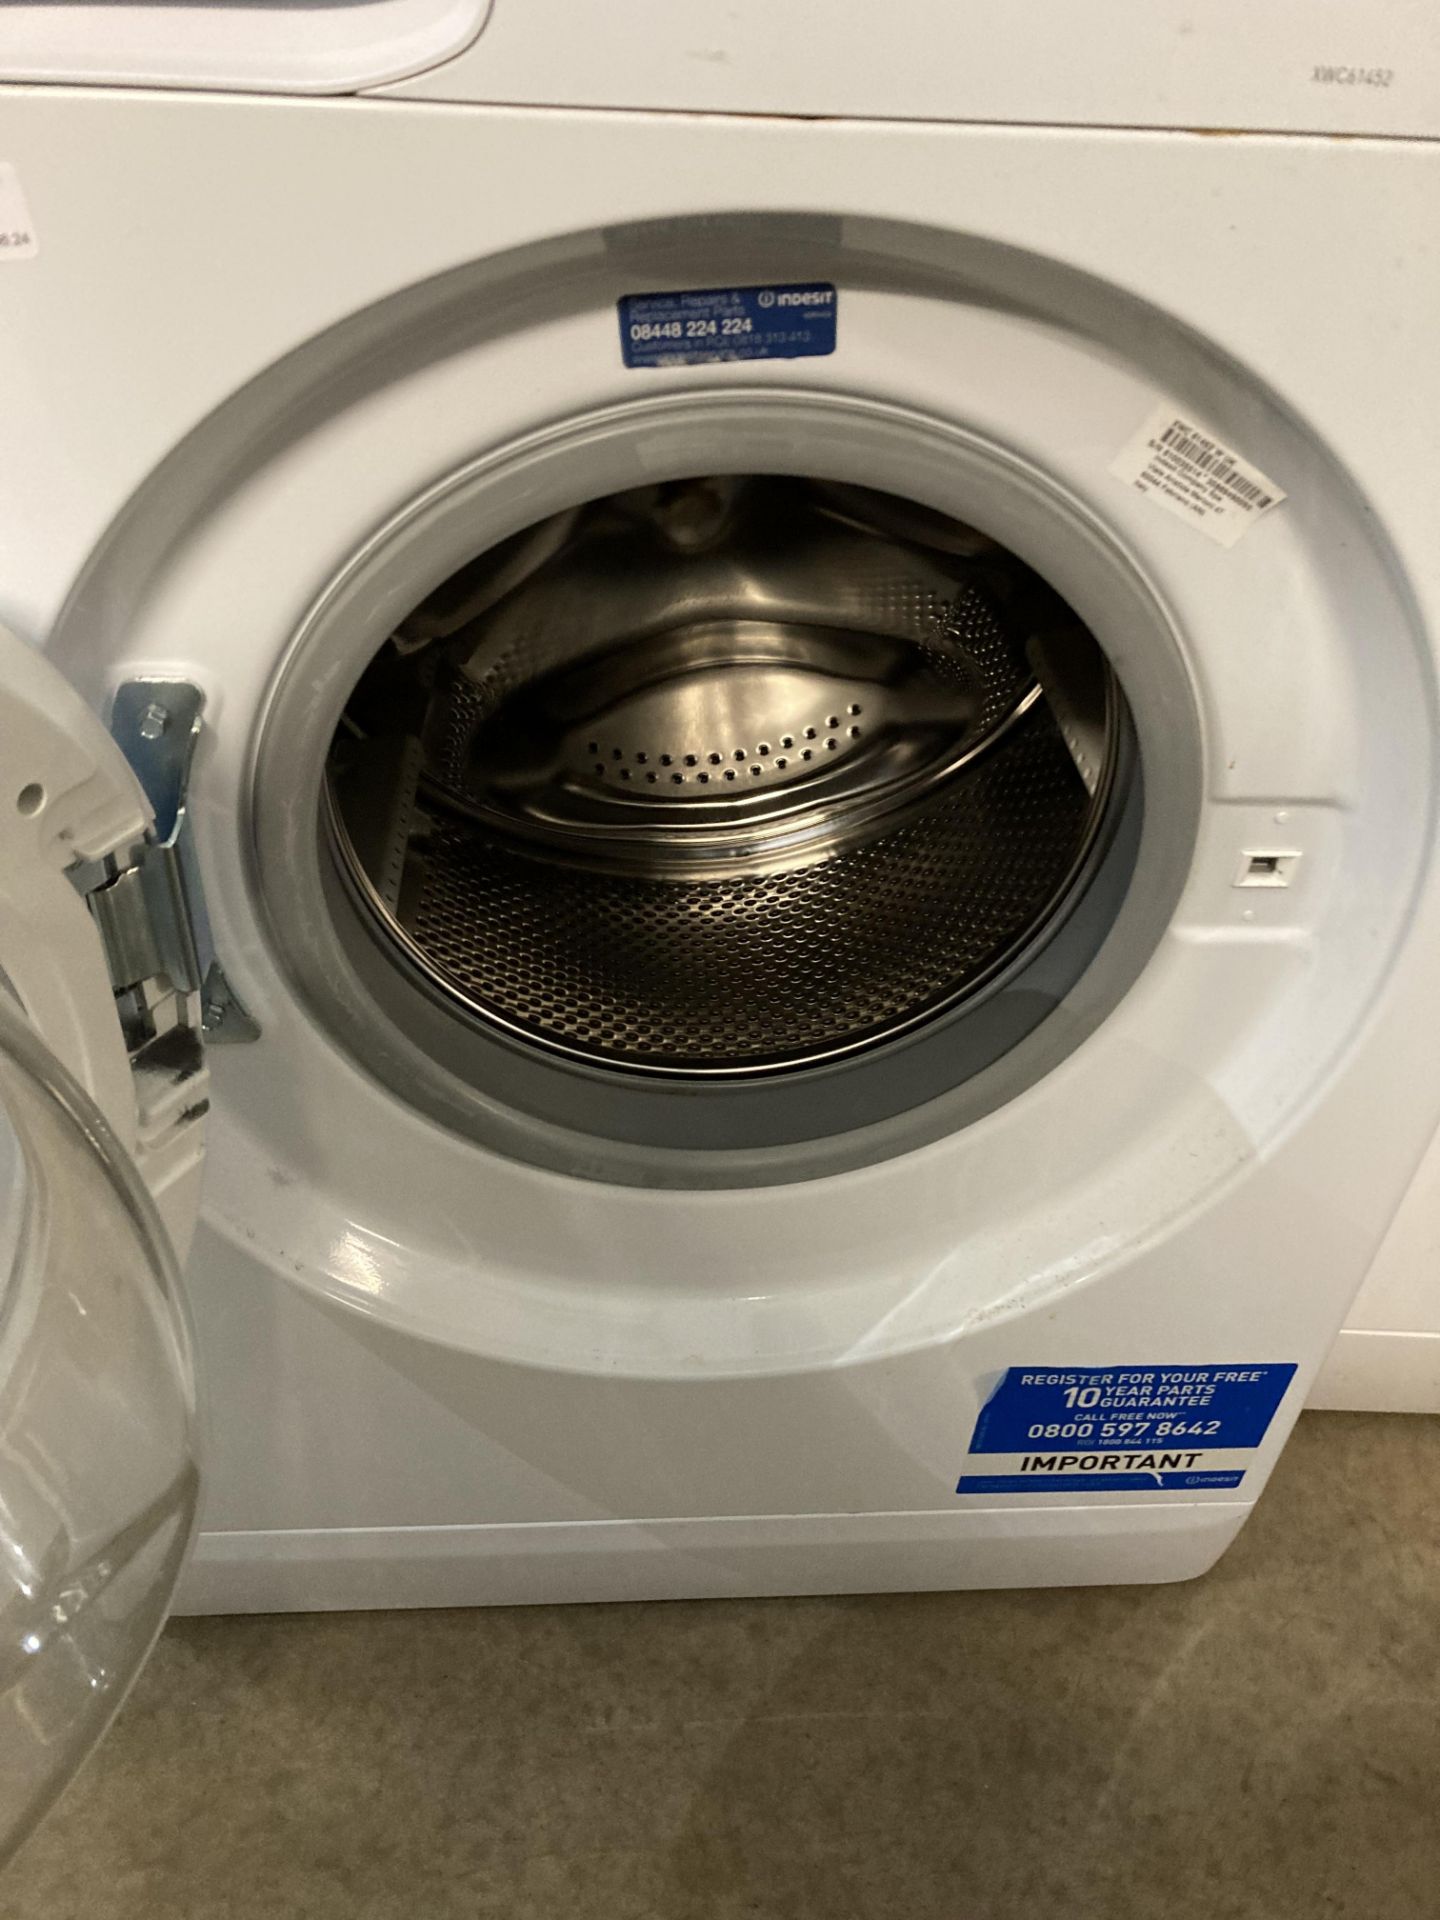 Indesit Innex 6kg washing machine model XWC61452 (PO) - Image 2 of 2